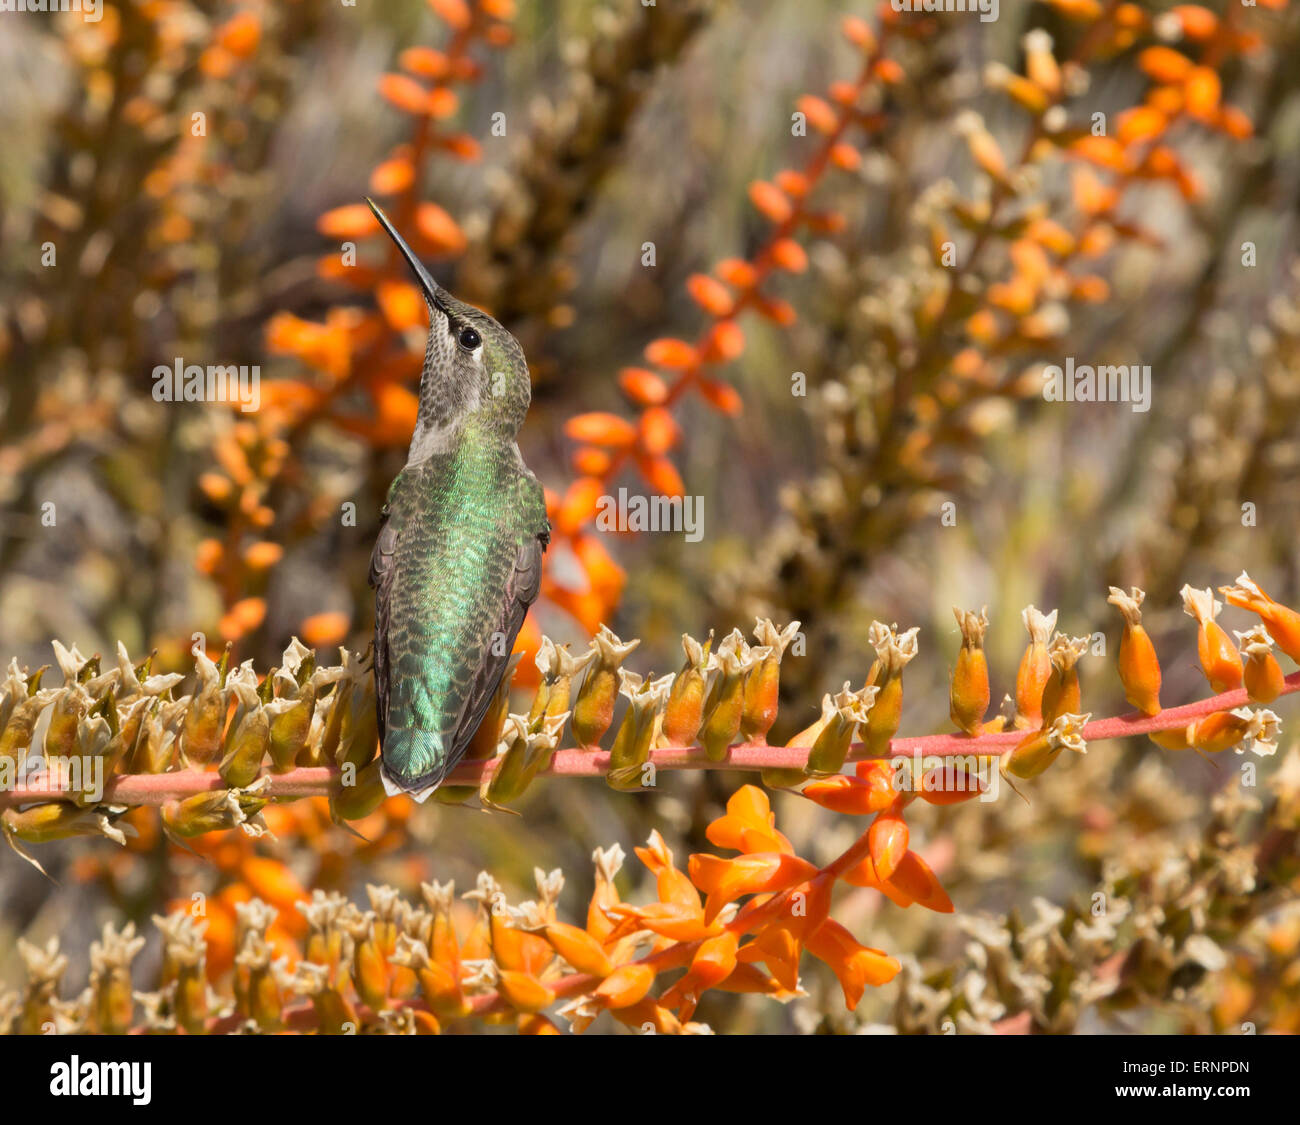 Anna’s Hummingbird, Calypte anna, sitting in the desert garden with orange flowers Stock Photo